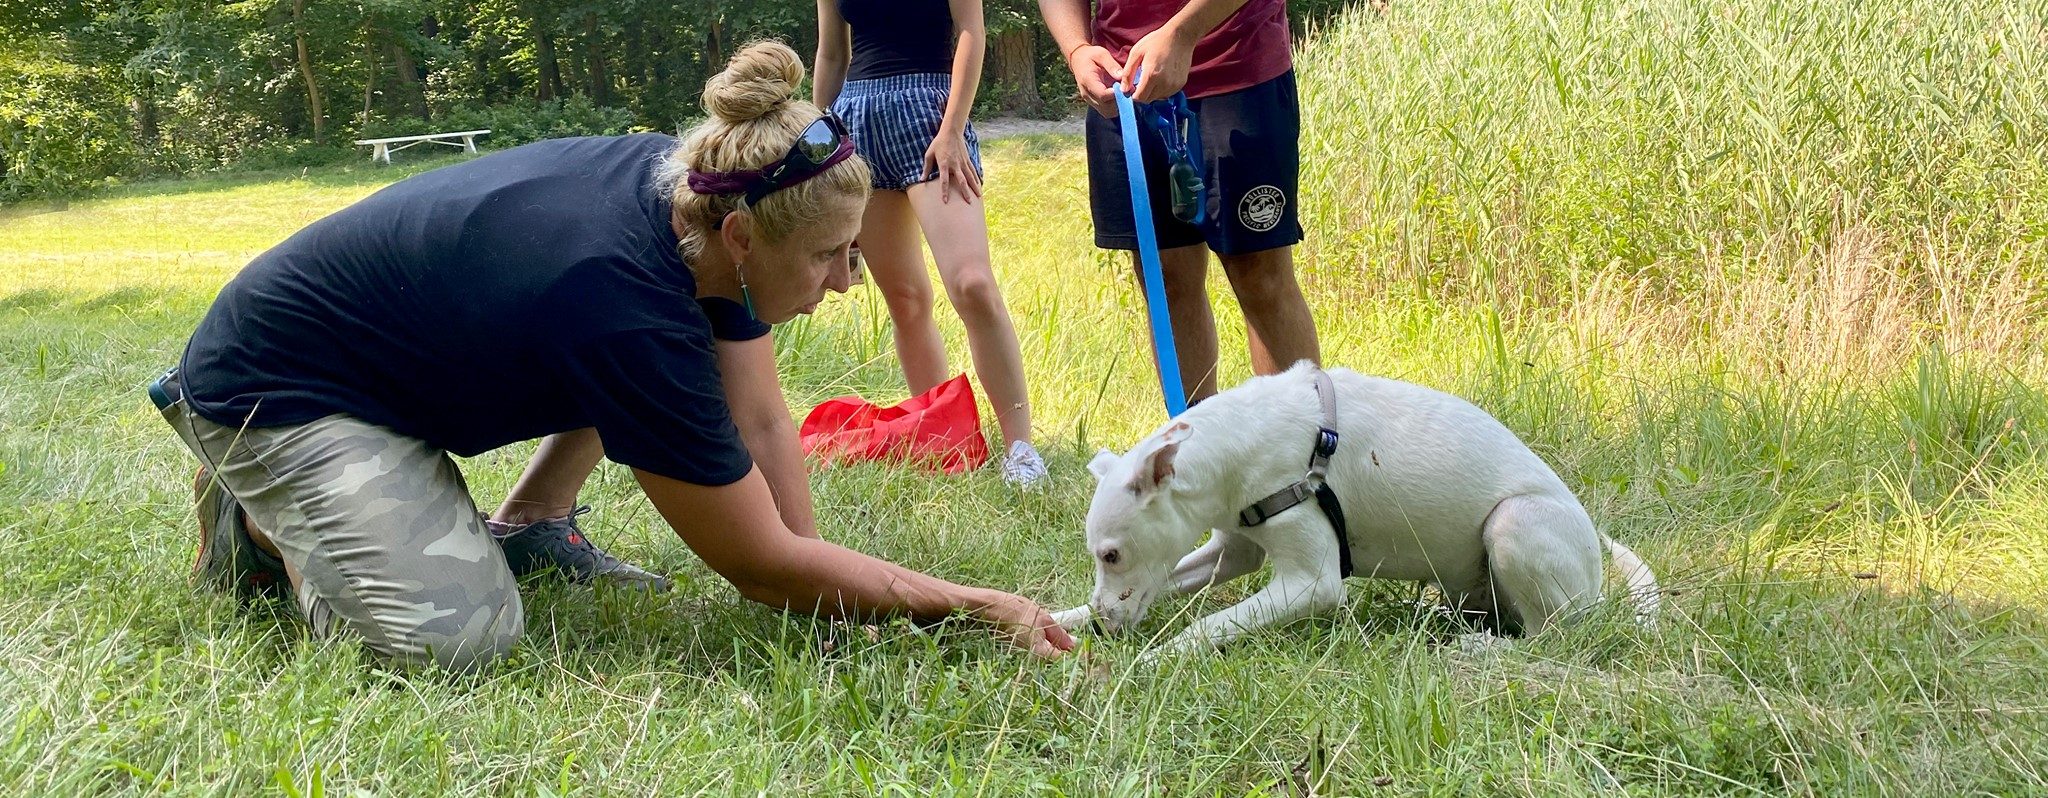 Animal Welfare Association's Behavior Manager Liz training white dog with family.